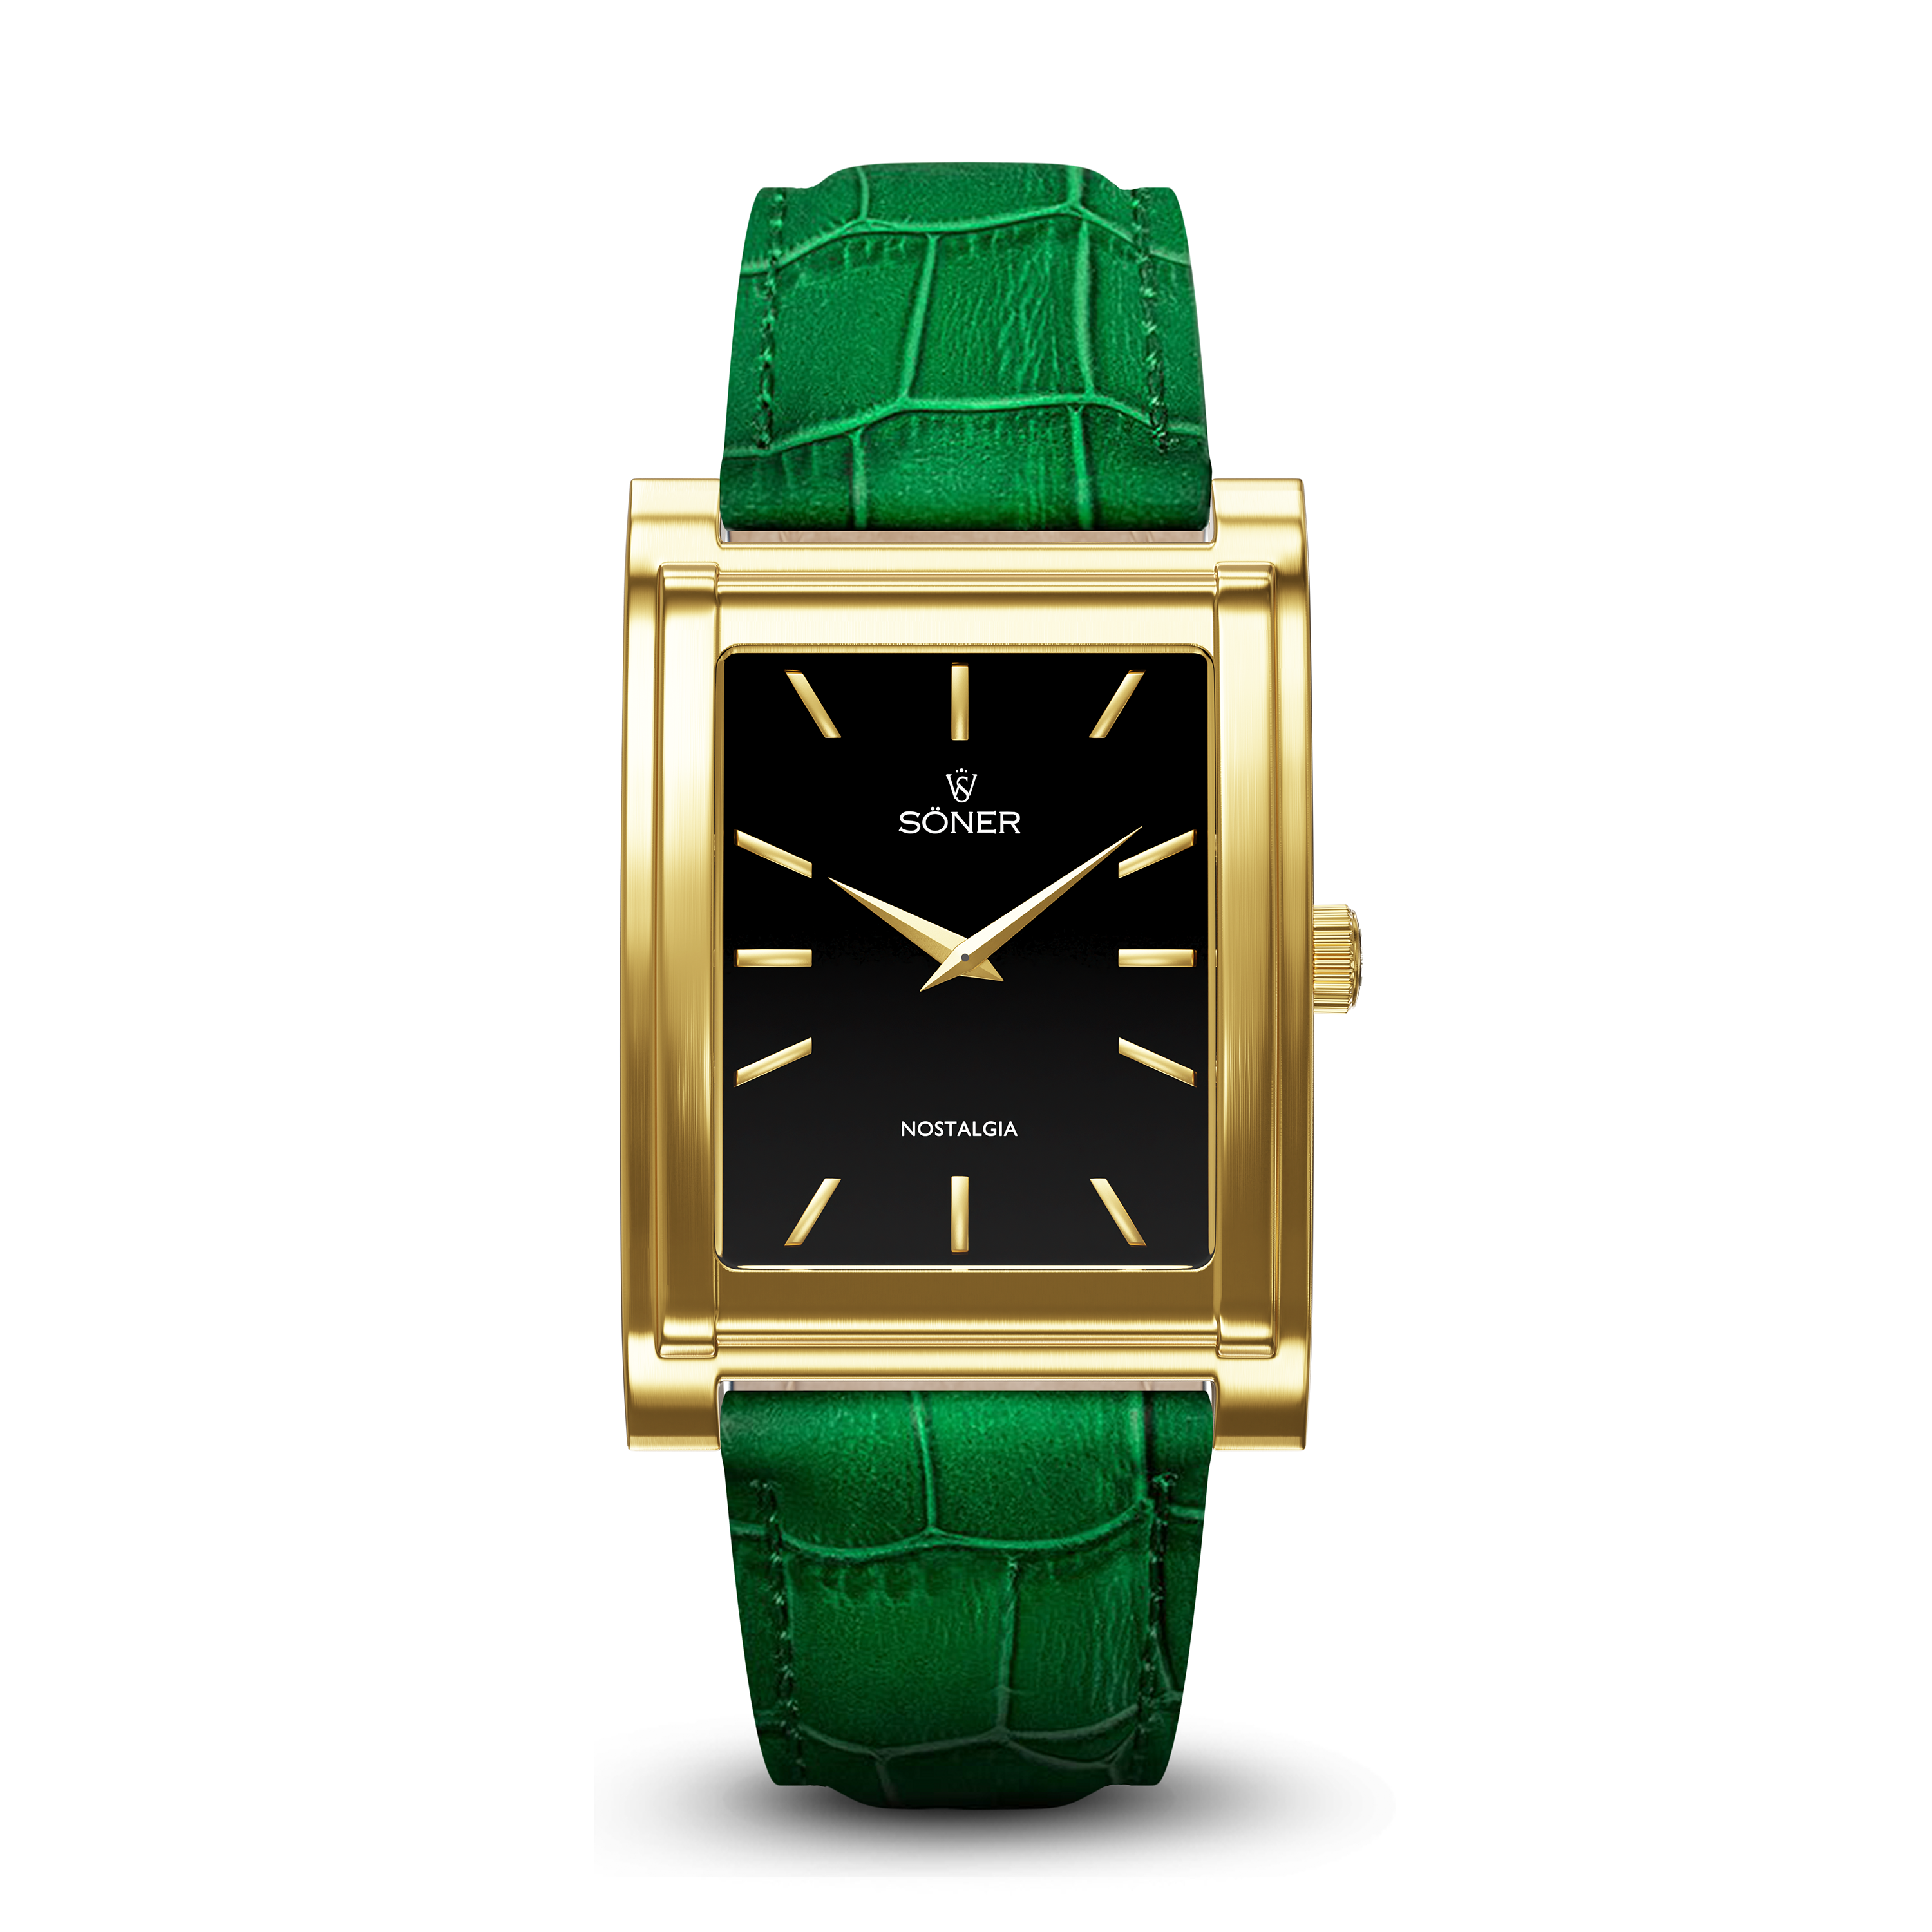 Square watch, Nostalgia Monaco - green alligator pattern leather strap front view